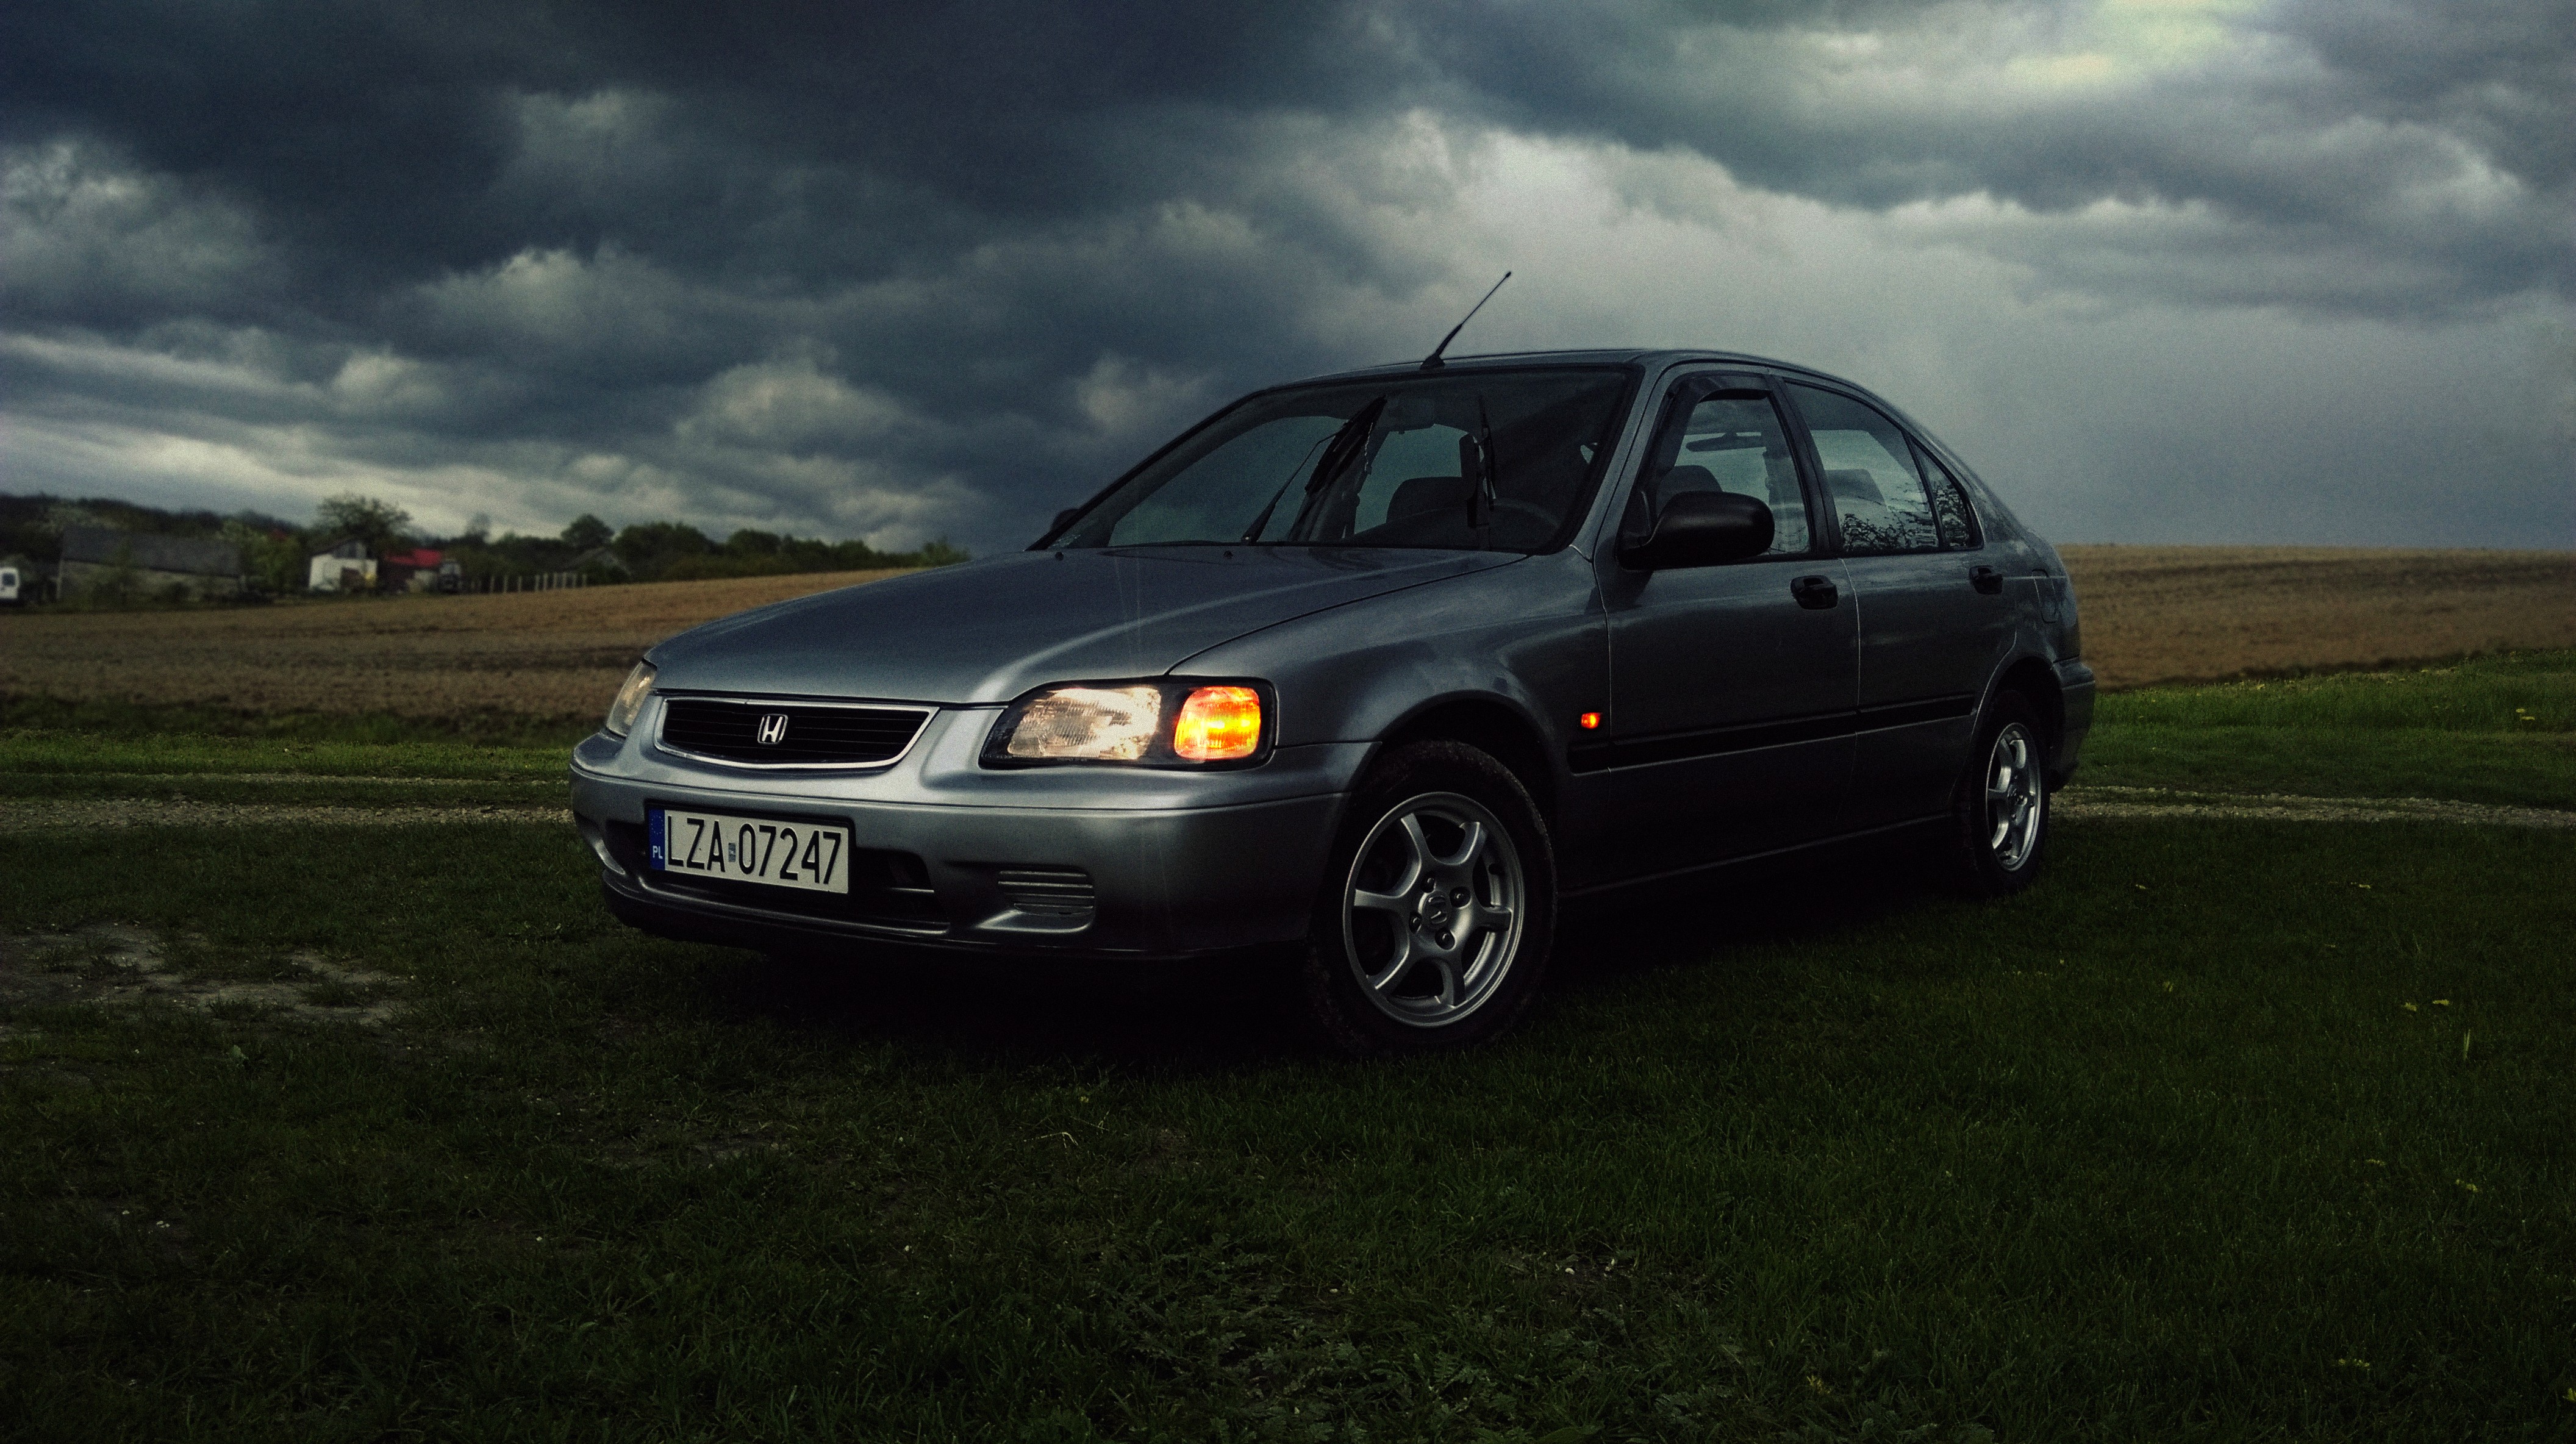 civic, Honda, Poland, Storm, Old Car, Car, Vehicle, Clouds Wallpaper